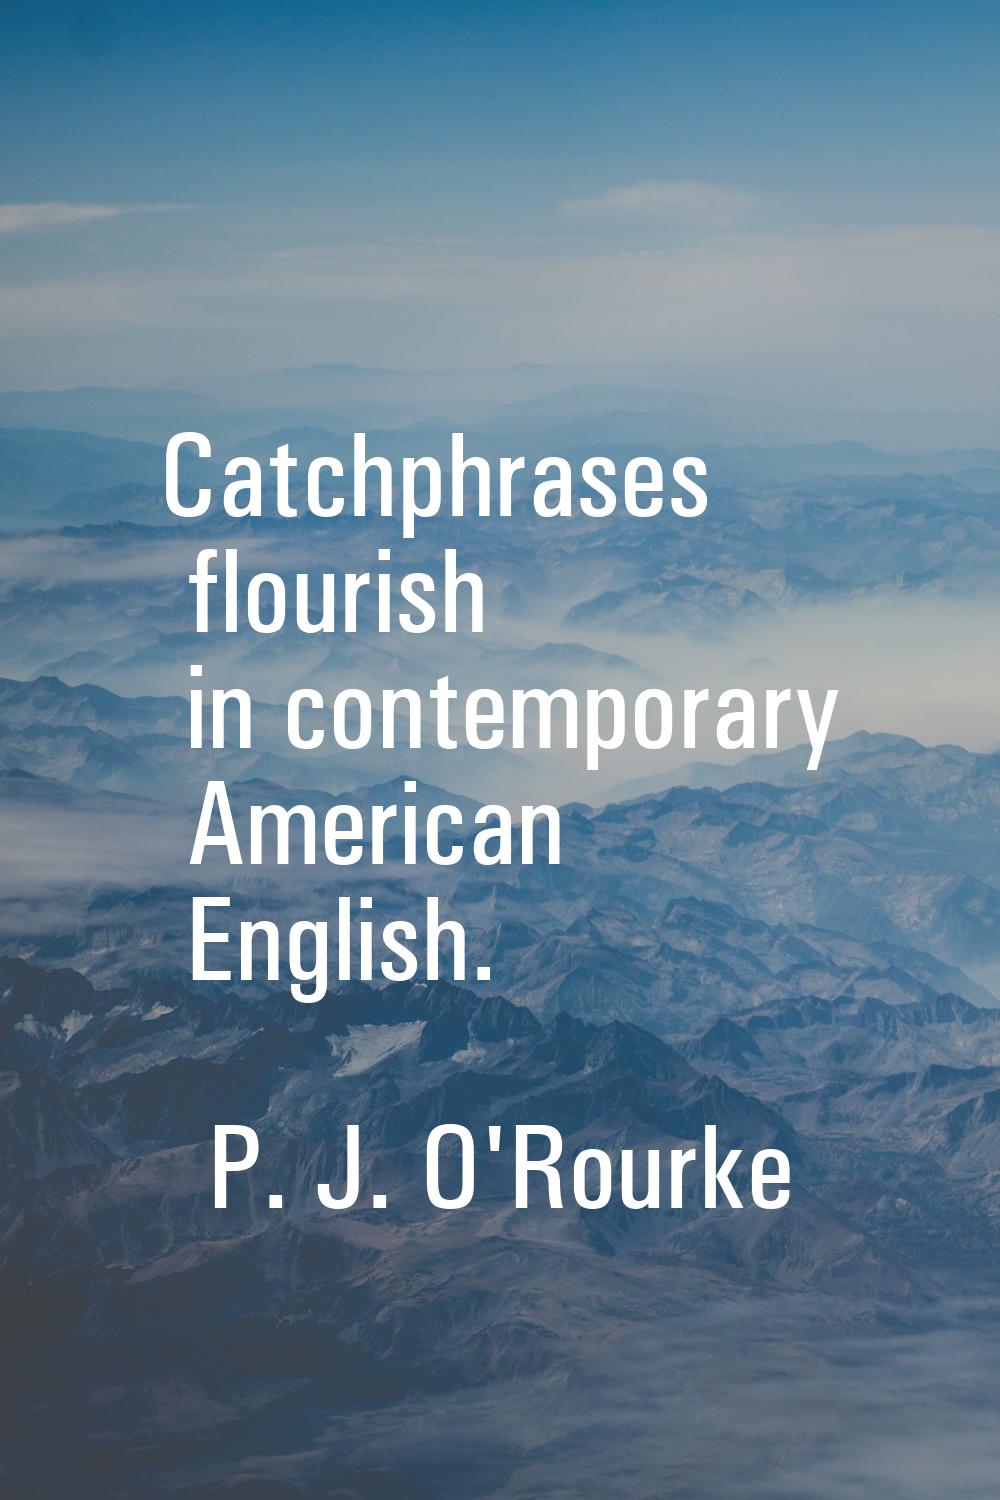 Catchphrases flourish in contemporary American English.